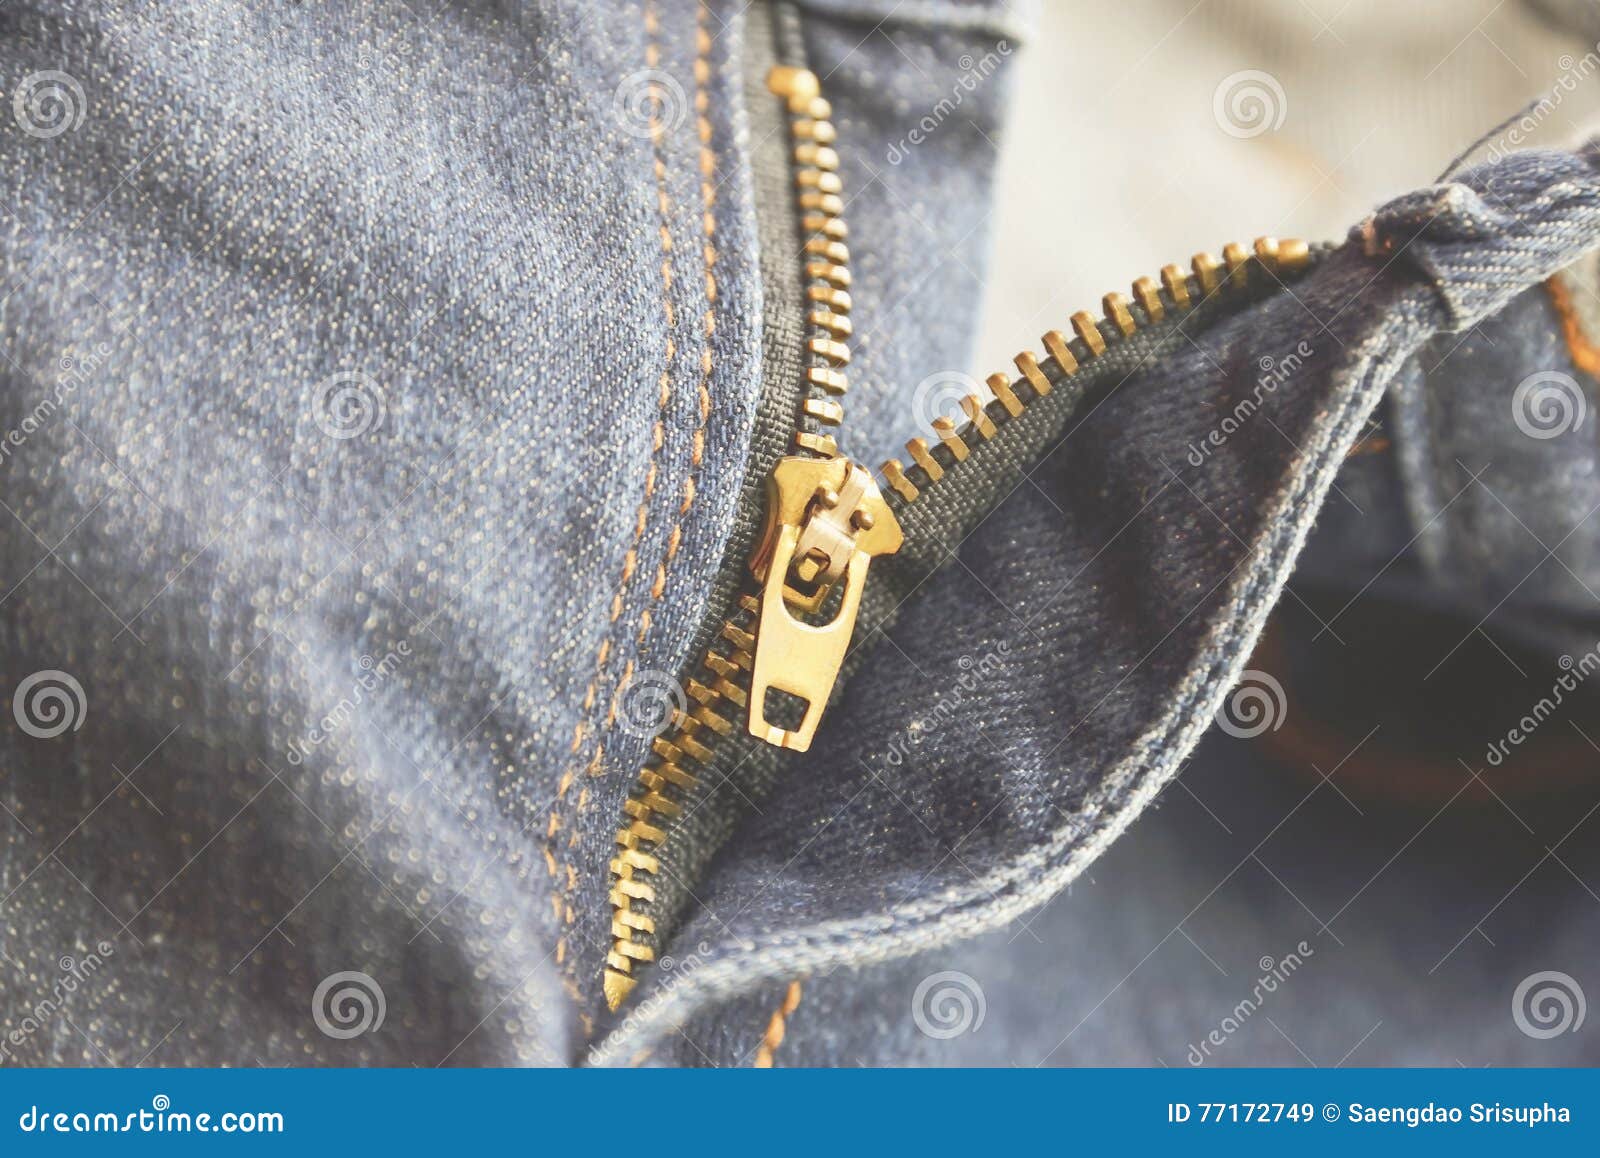 Zip Pants stock image. Image of material, garment, open - 77172749